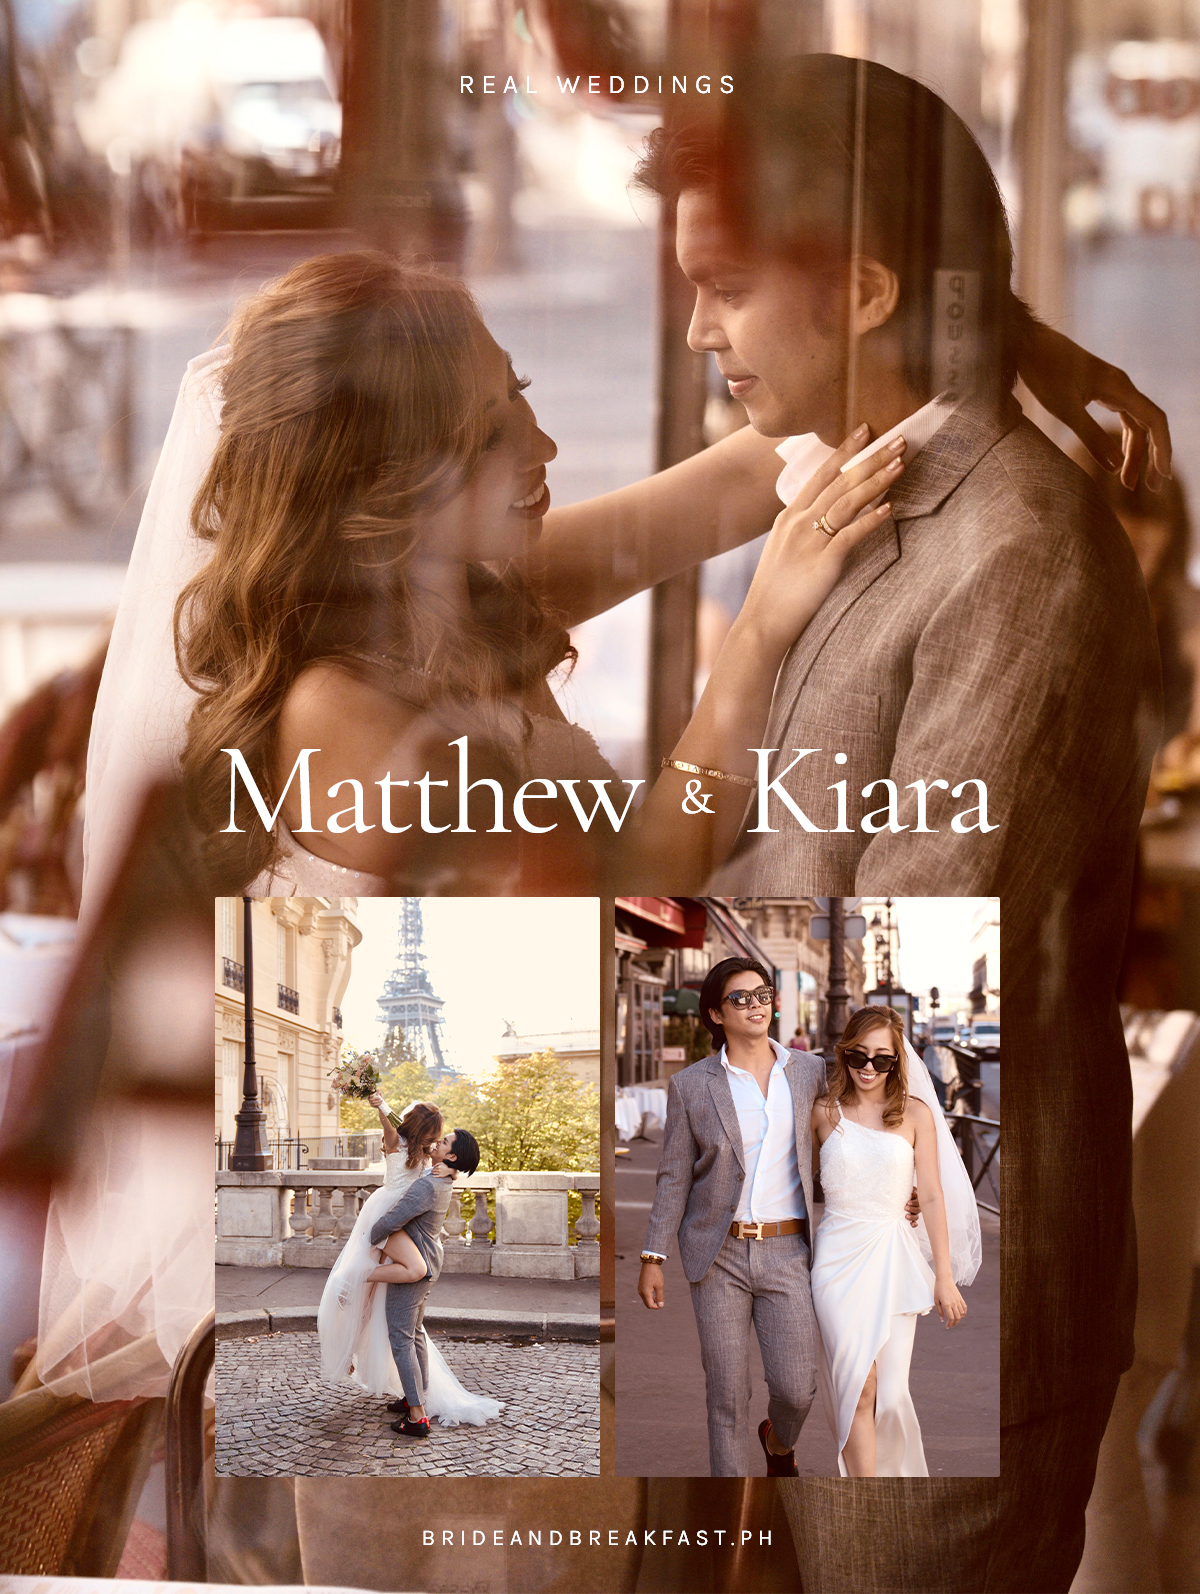 Matthew and Kiara